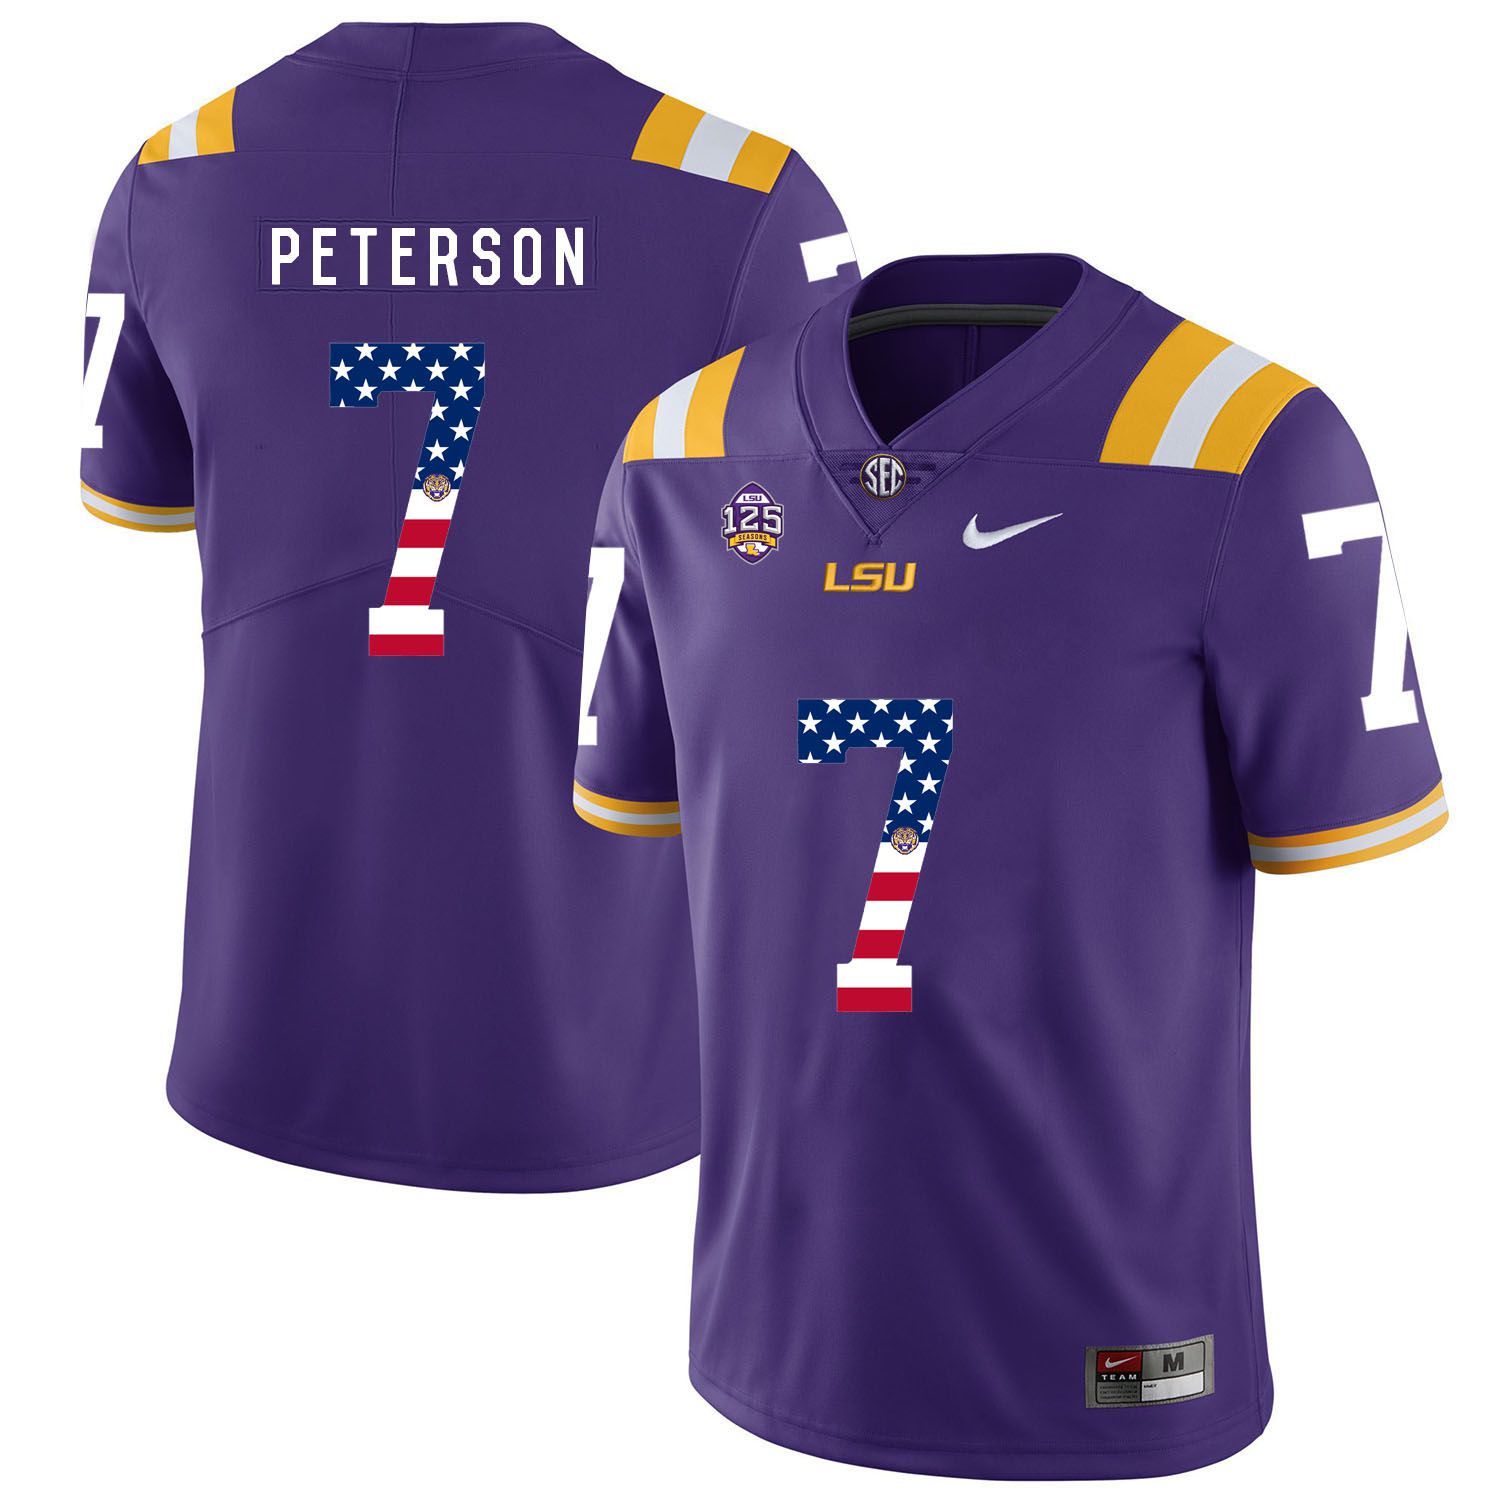 Men LSU Tigers #7 Peterson Purple Flag Customized NCAA Jerseys